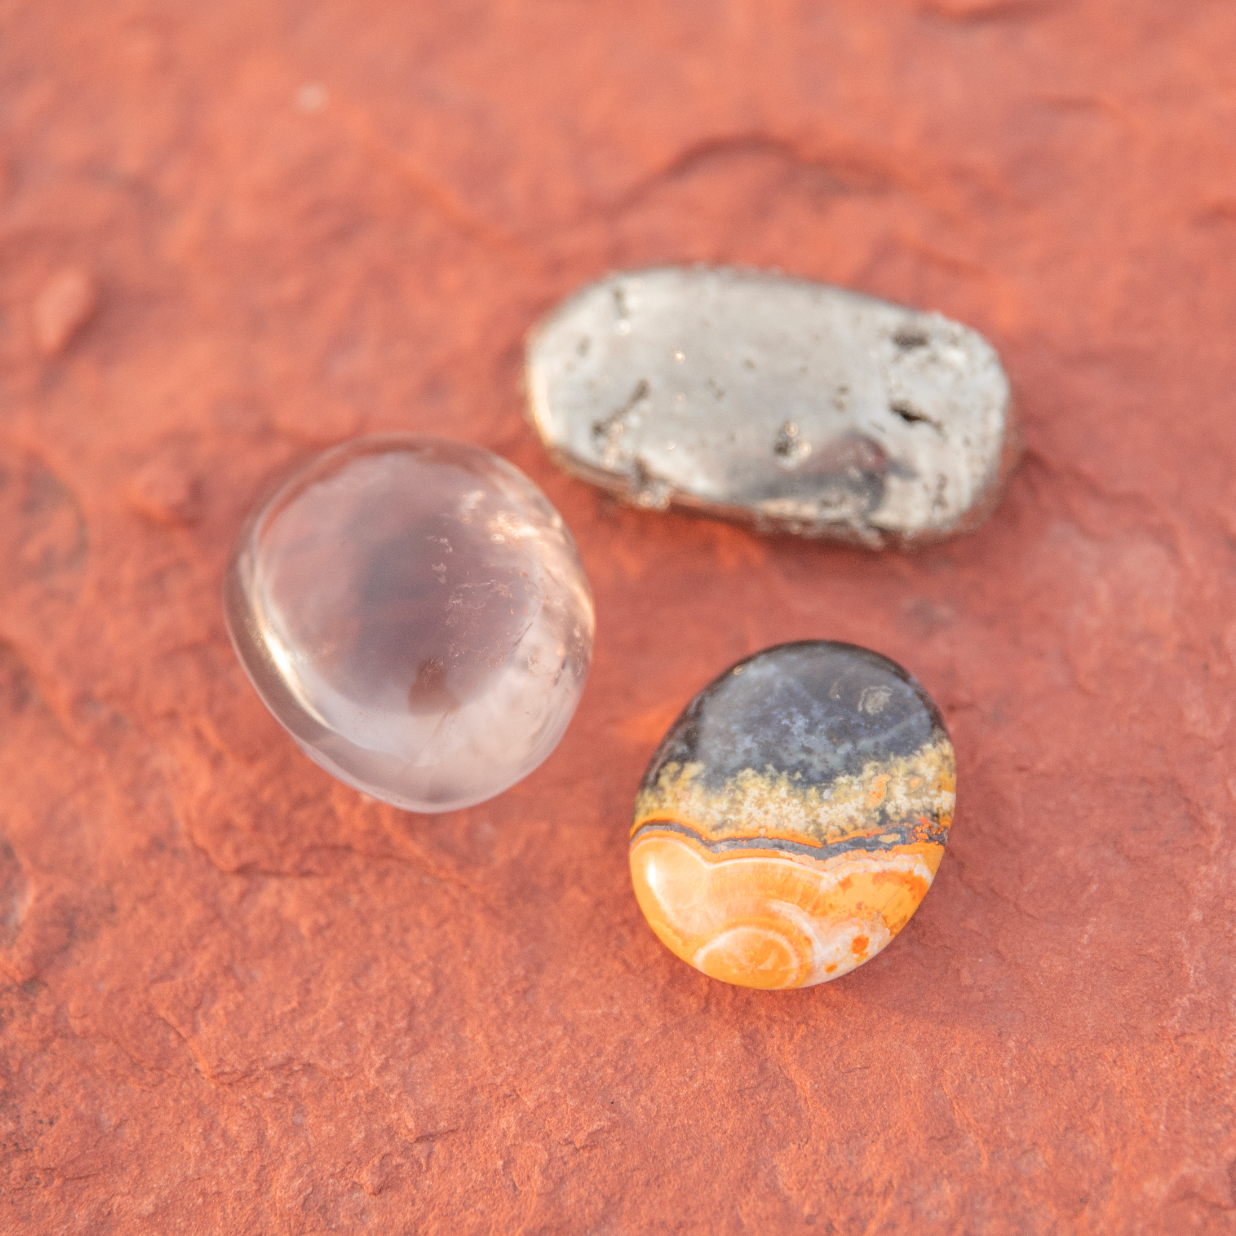 healing crystals: crystal palm stones in sedona, arizona used for energy healing